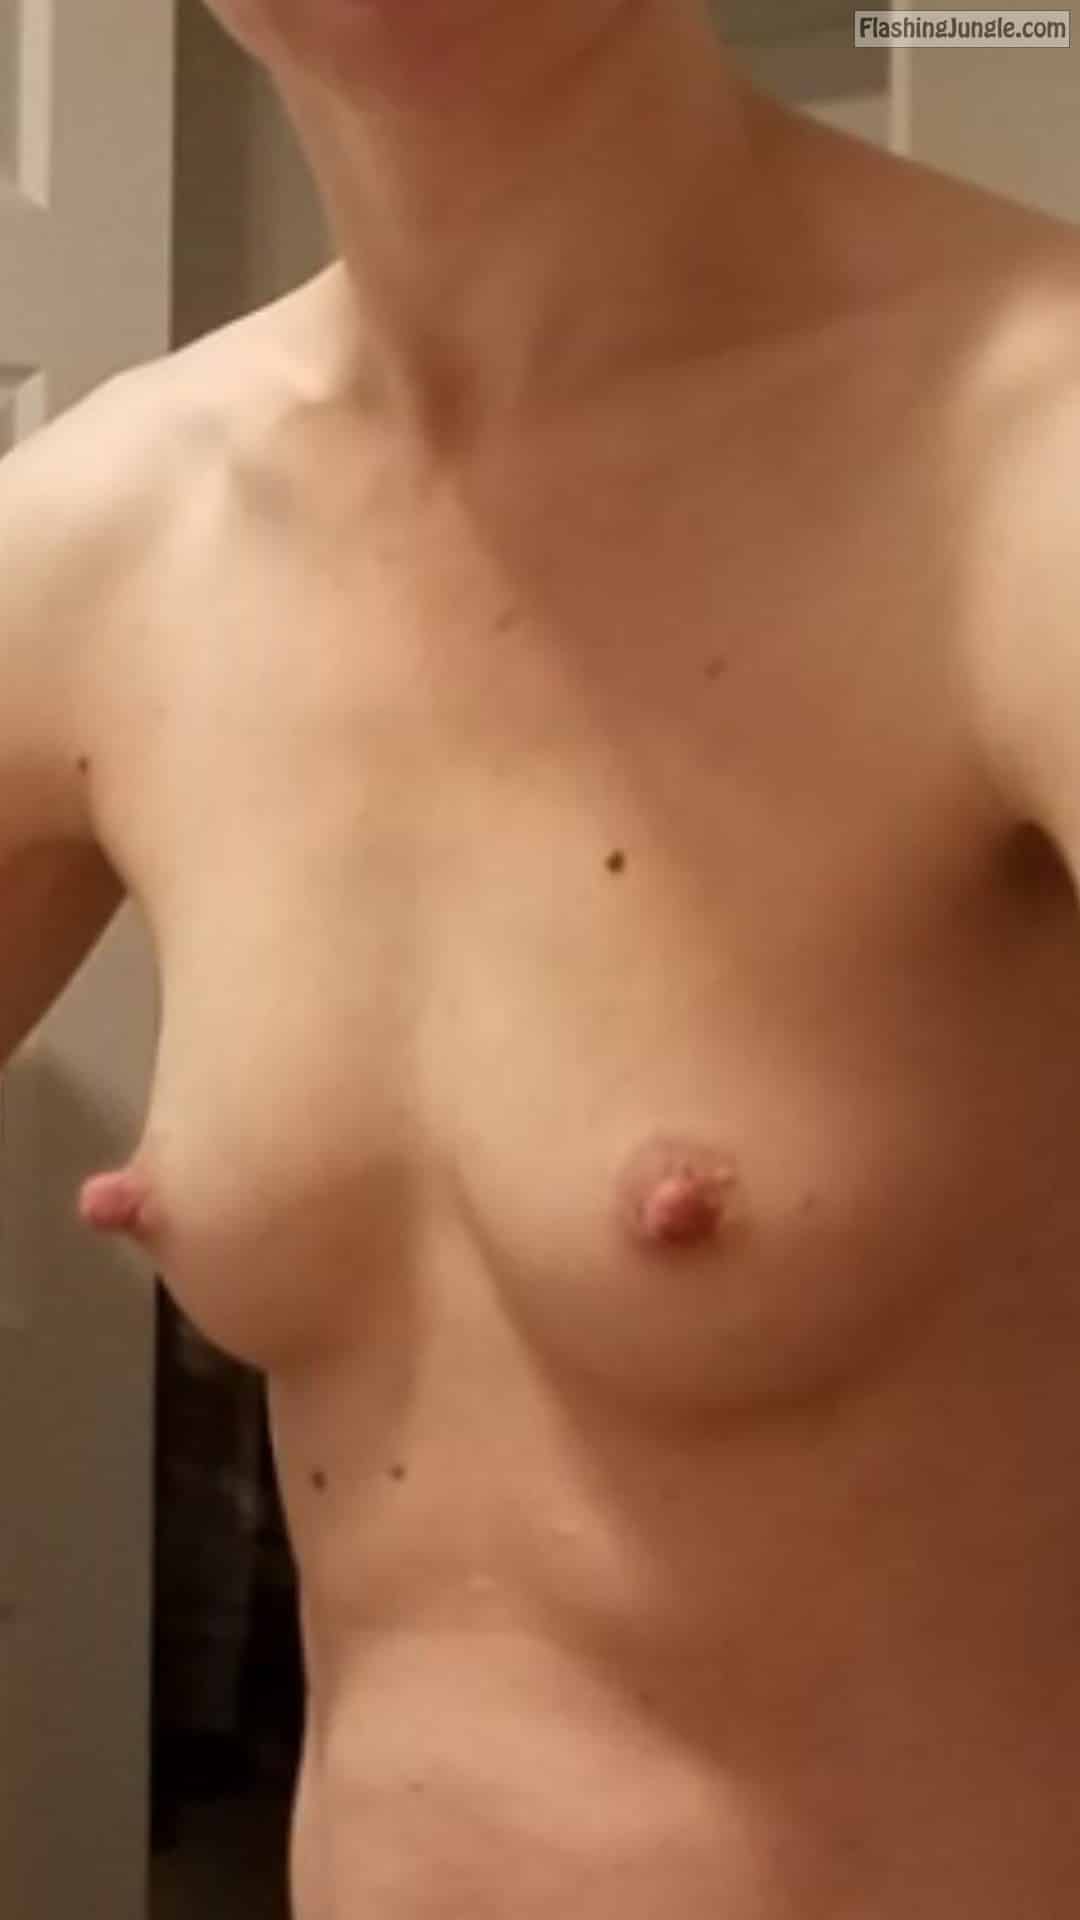 small tits selfie pics - Public Nudity and Flashing | FlashingJungle.com